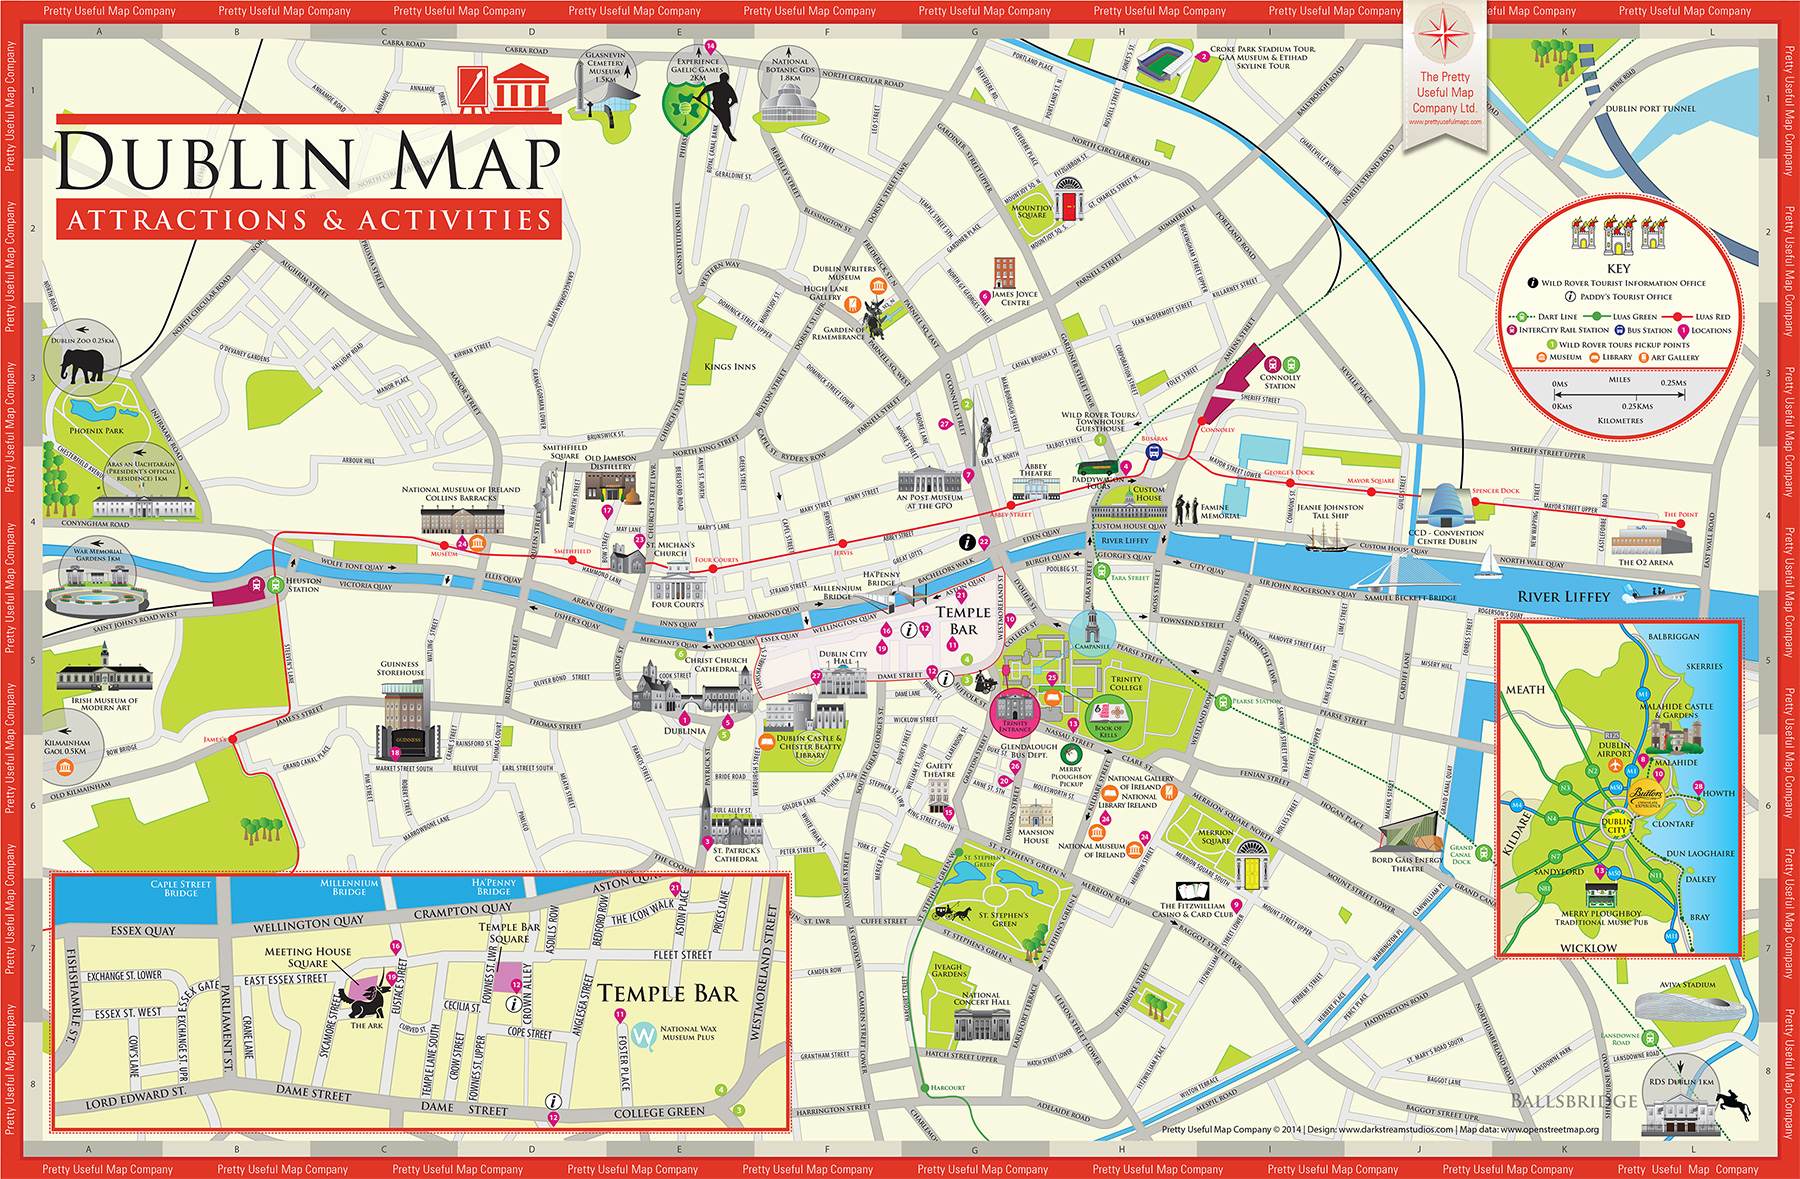 An example of a Dublin tourist map